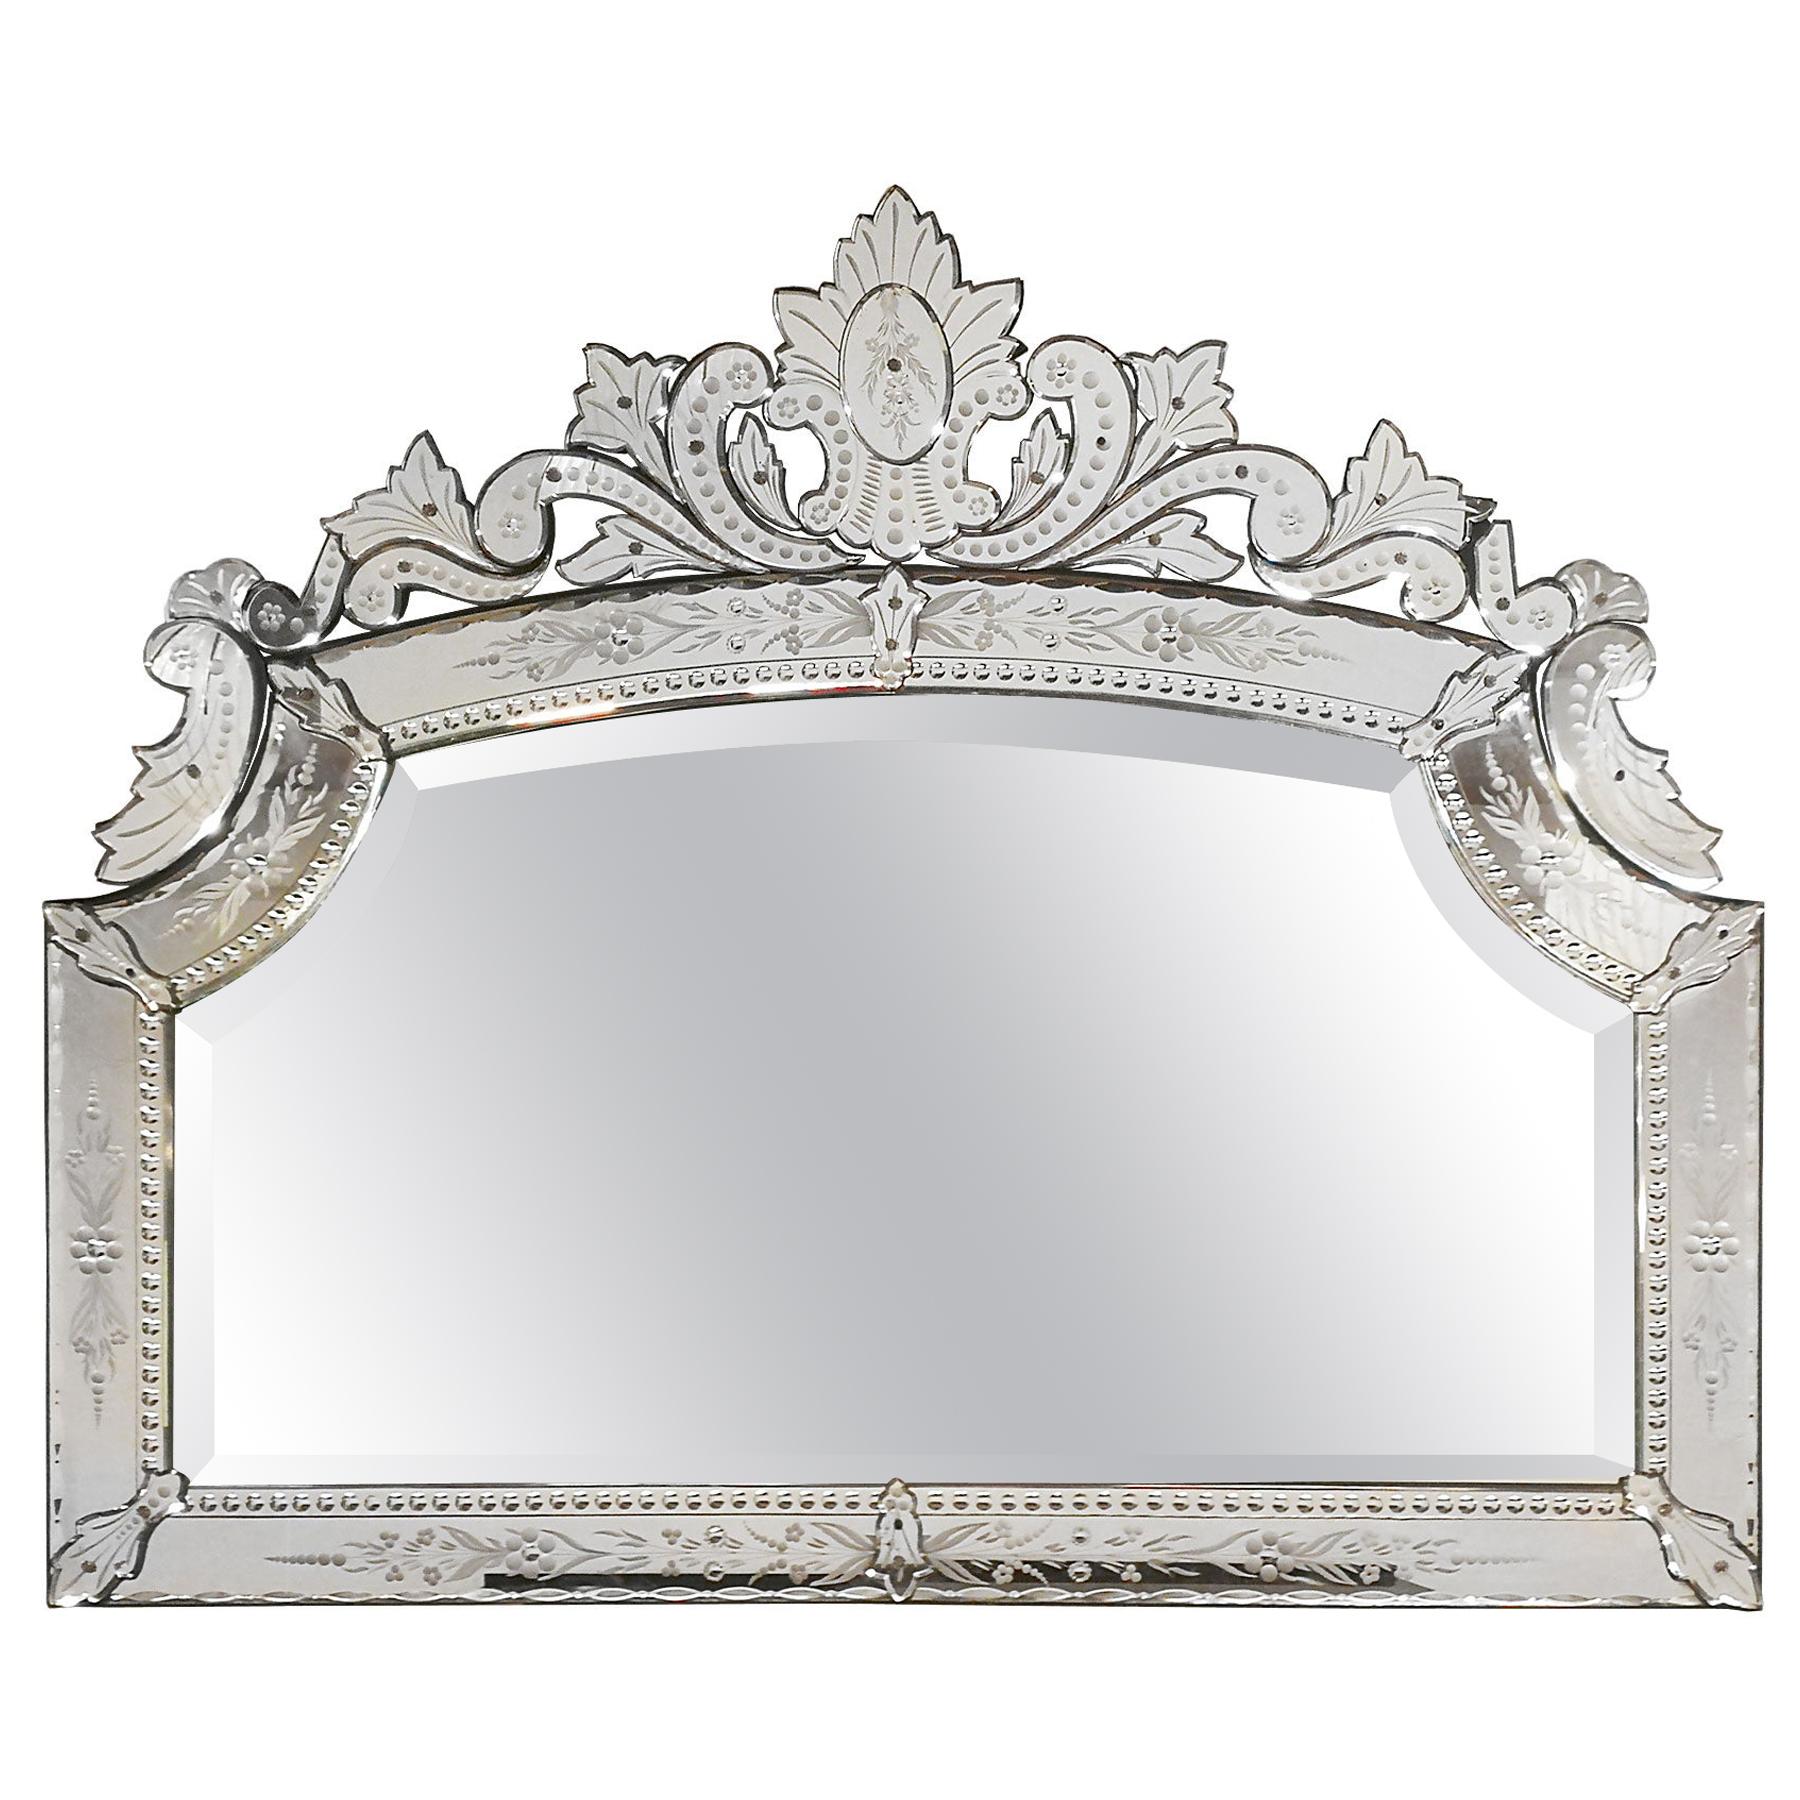 1940s Large Neoclassical Beveled Mirror, Spain, Majorca